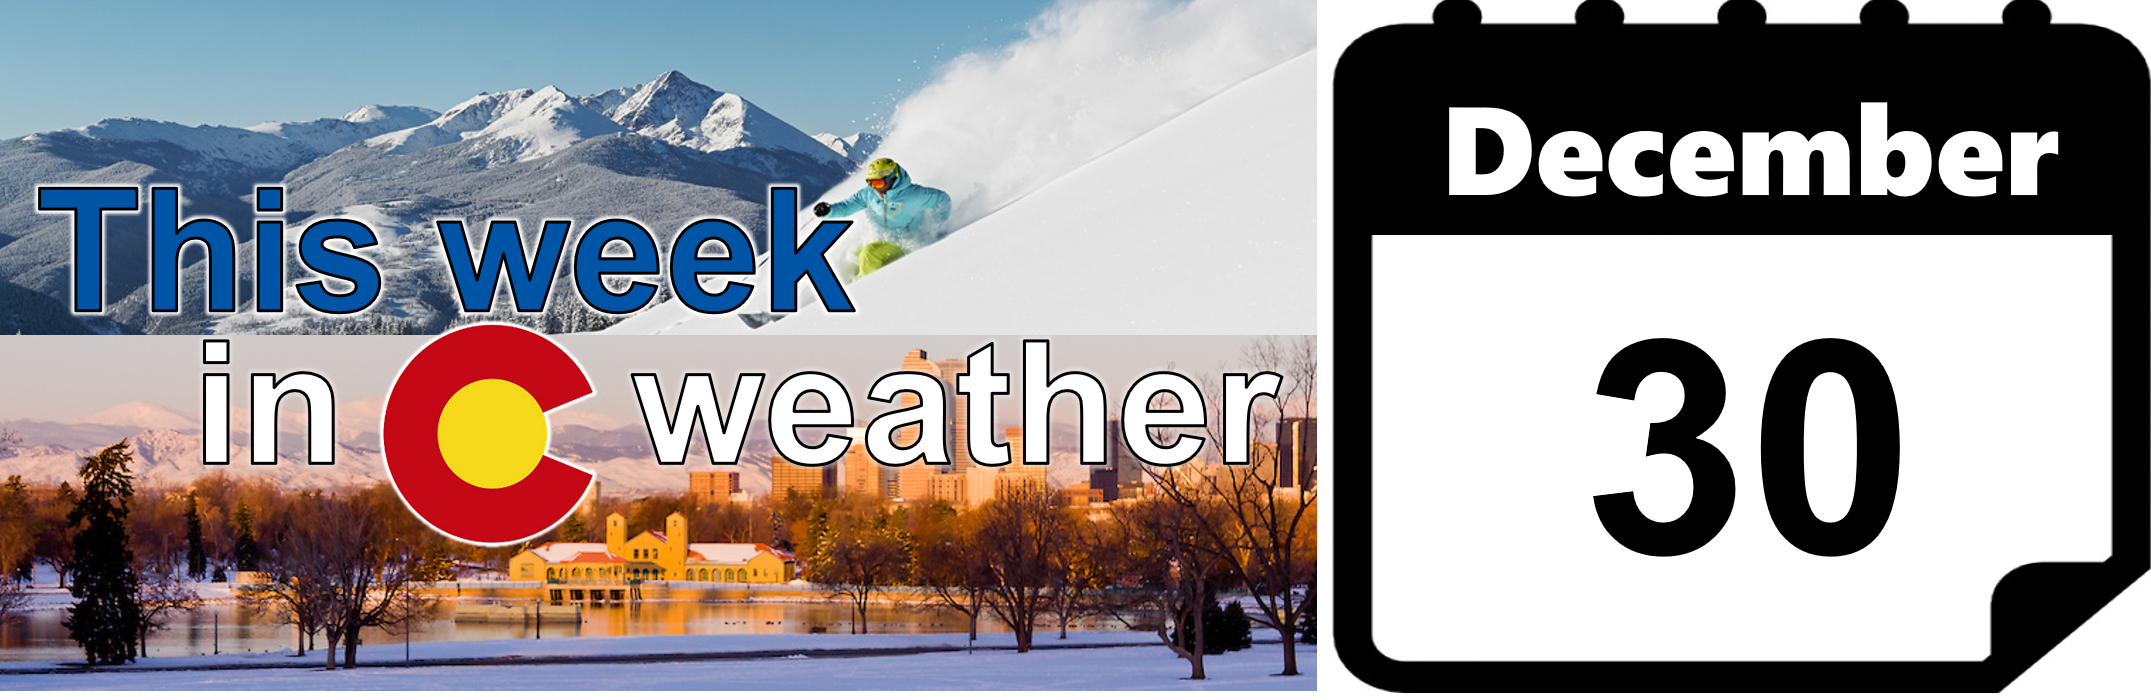 This week in Colorado weather December 30, 2019 BoulderCAST